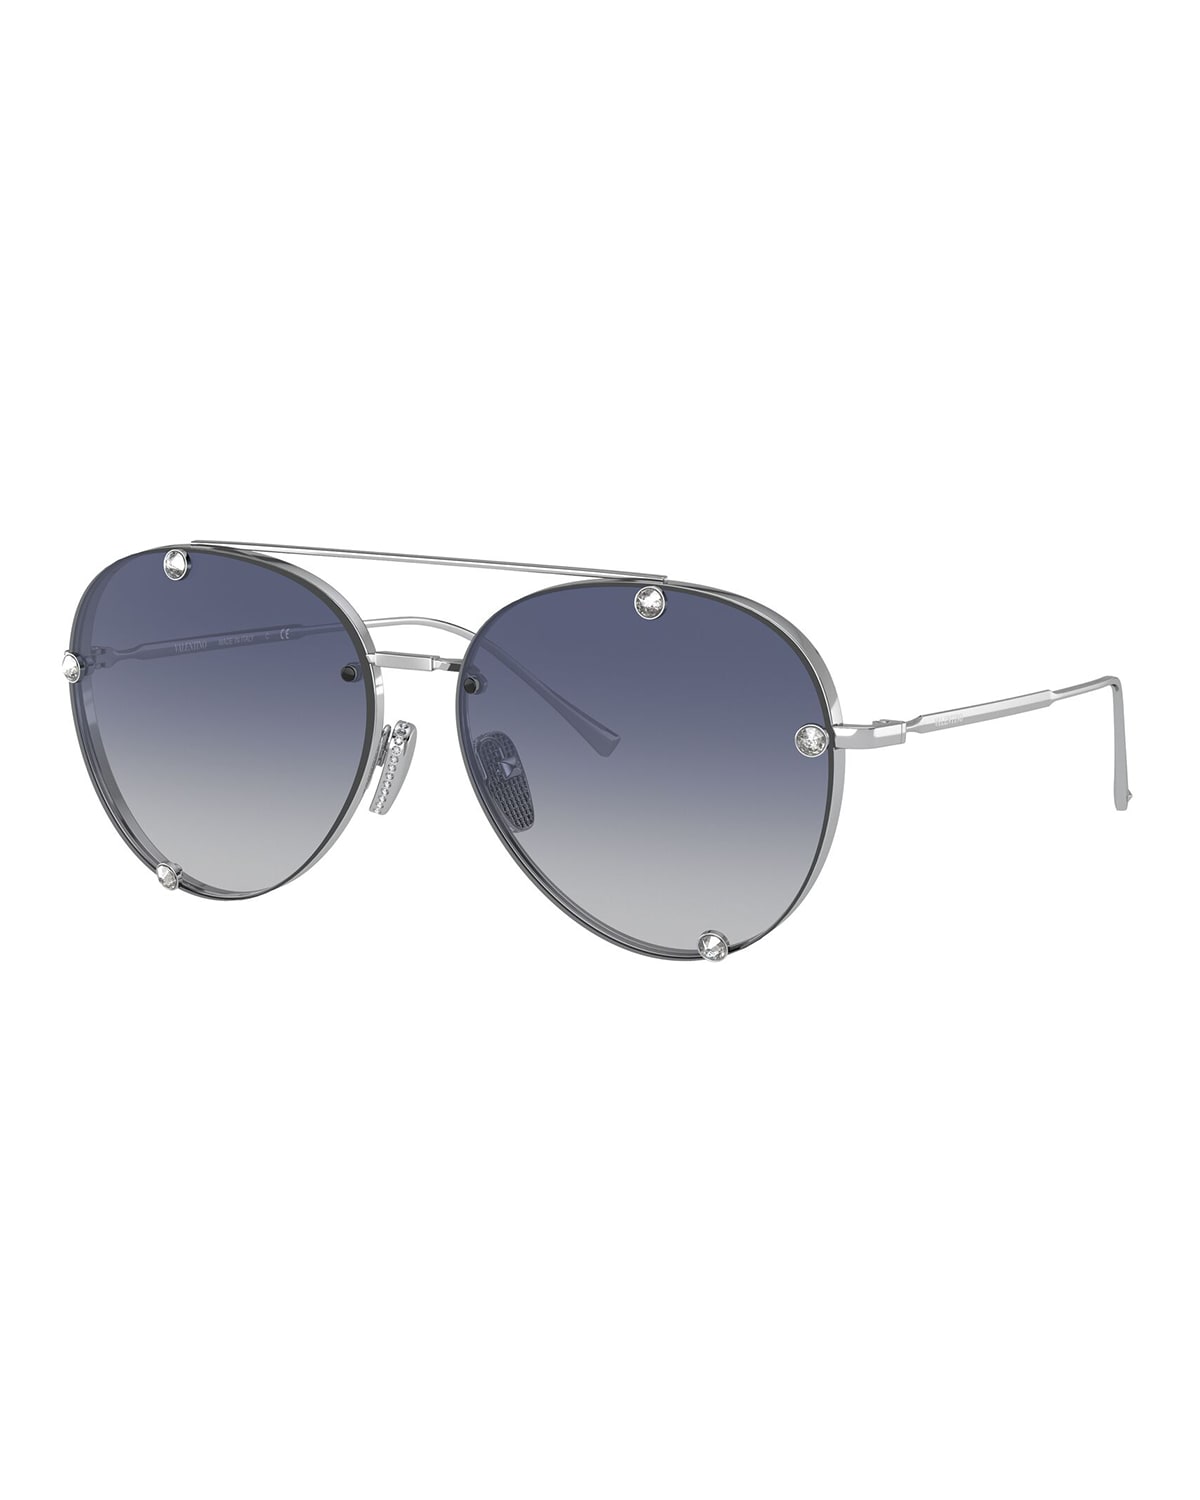 Valentino Metal Aviator Sunglasses with Crystal Trim